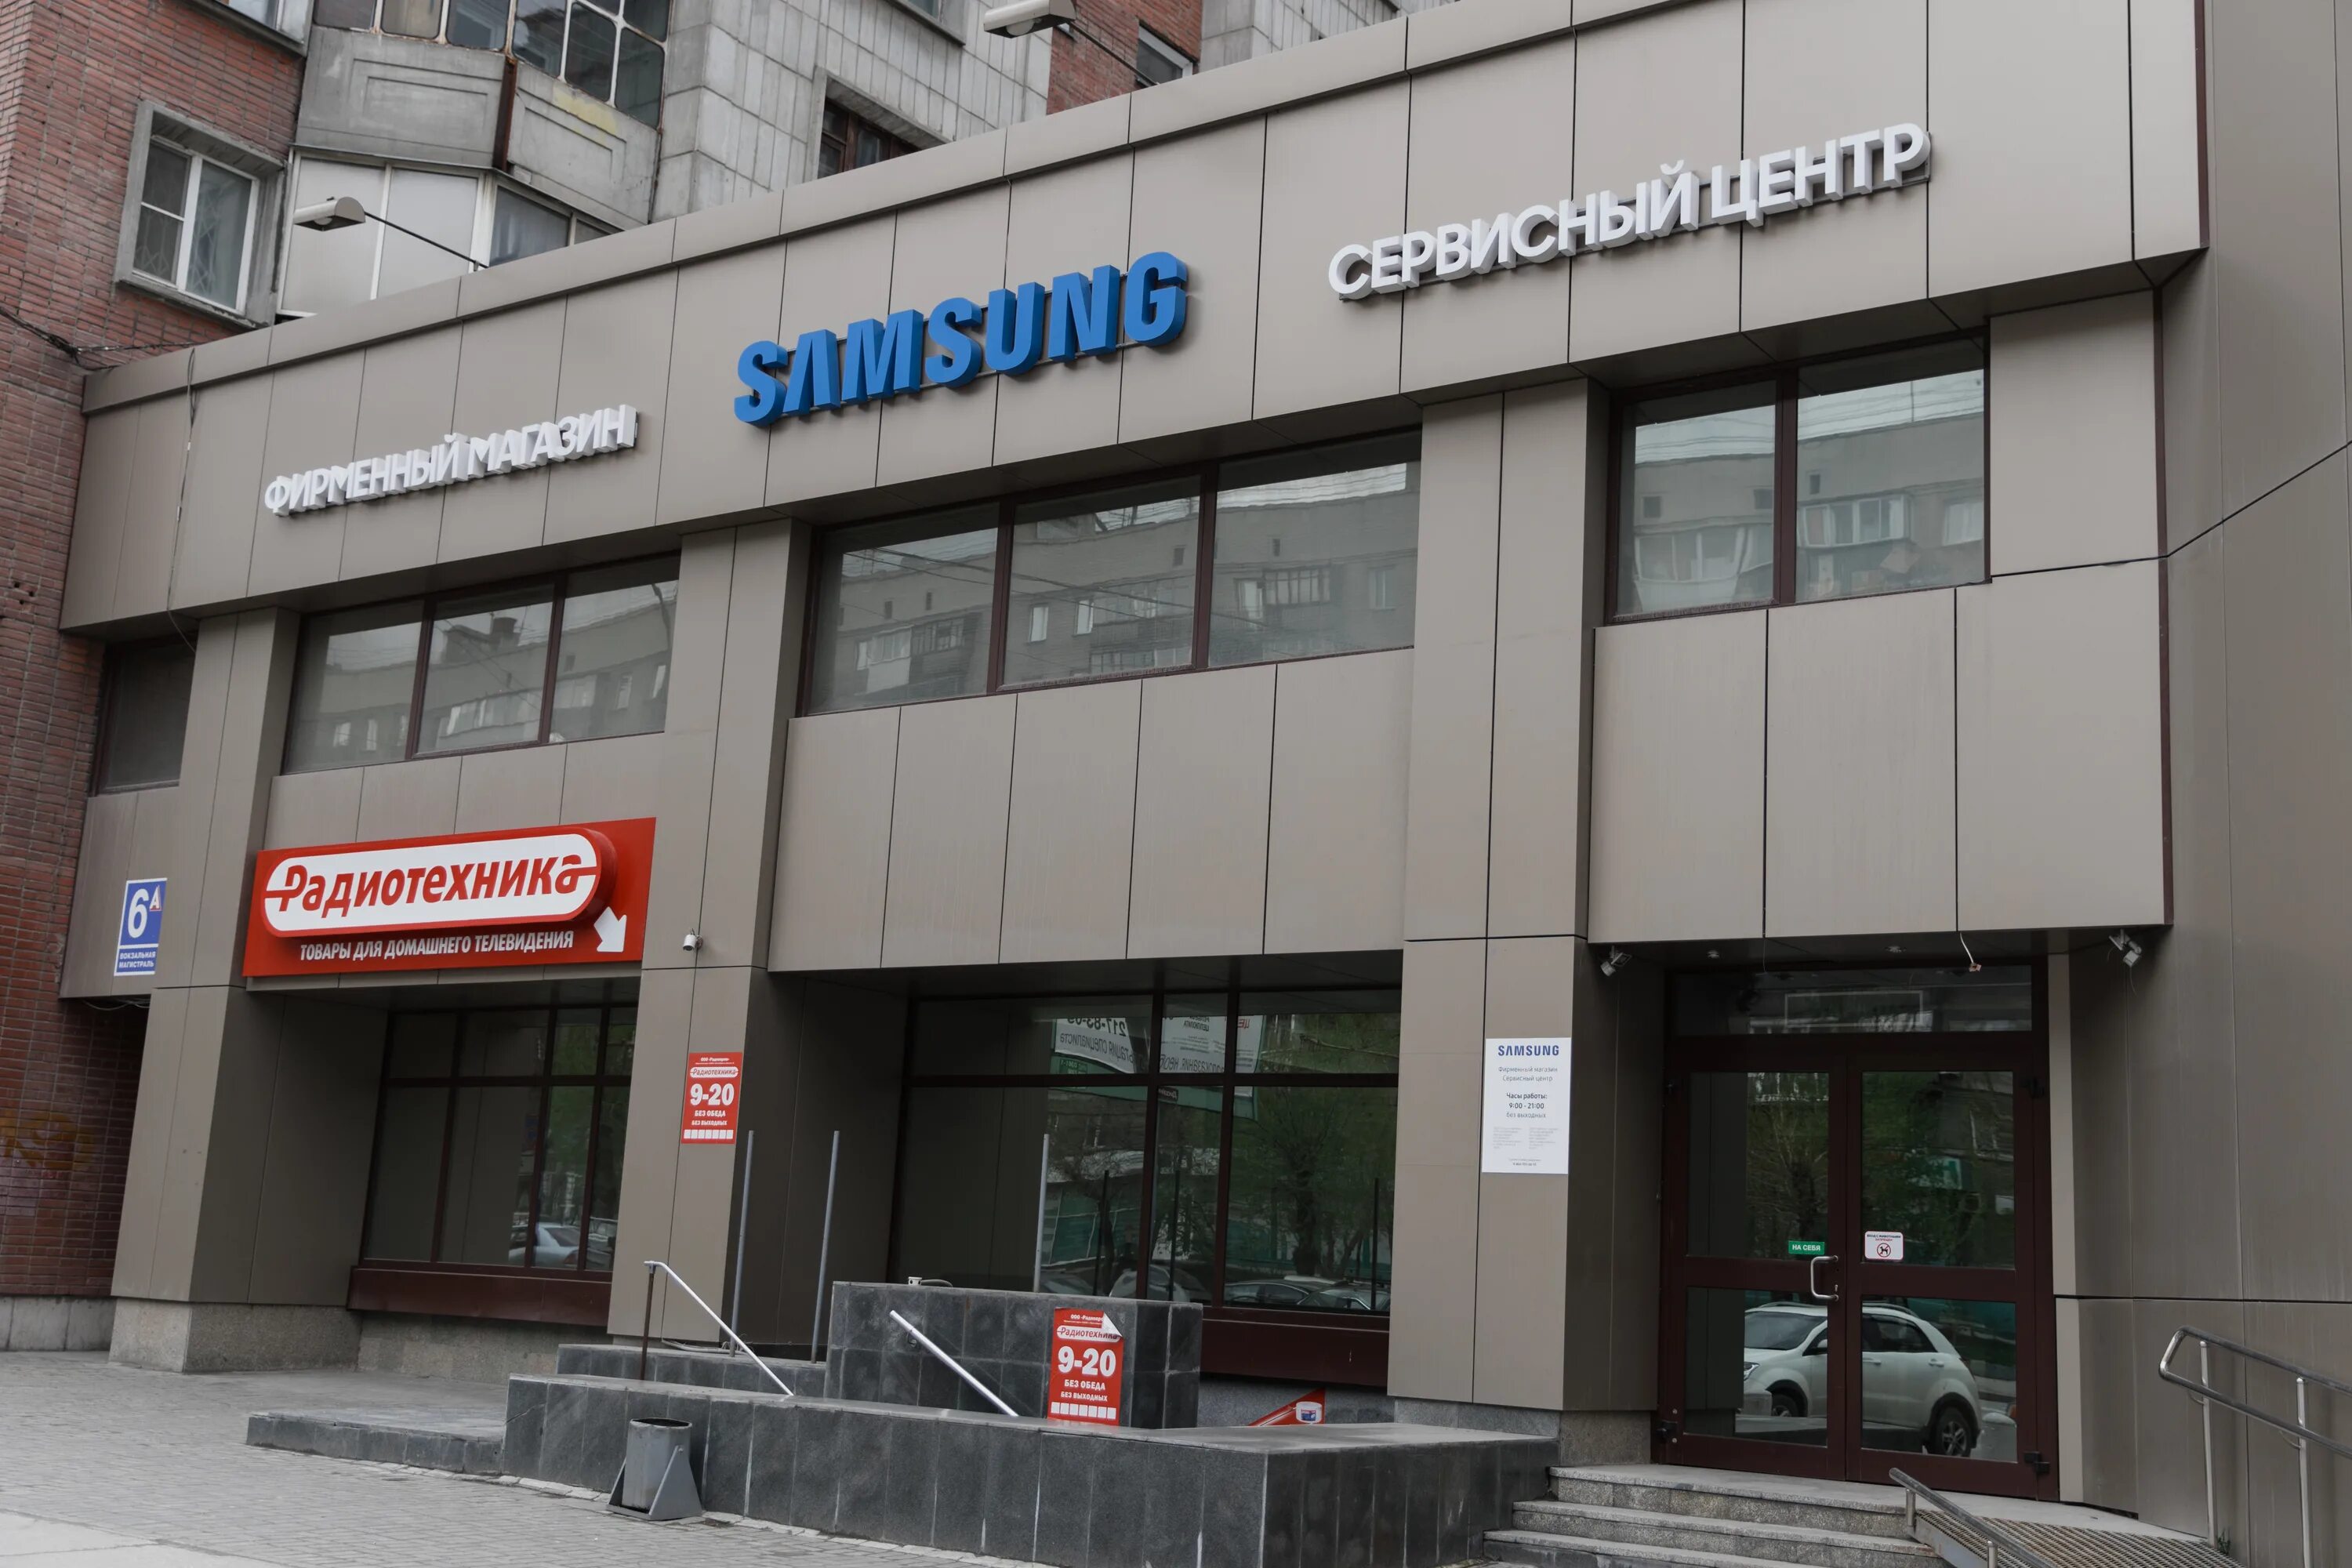 Сервисный центр. Сервисный центр самсунг в Новосибирске. Samsung сервис центр. СЦ Samsung. Самсунг гарантийный сервисный центр